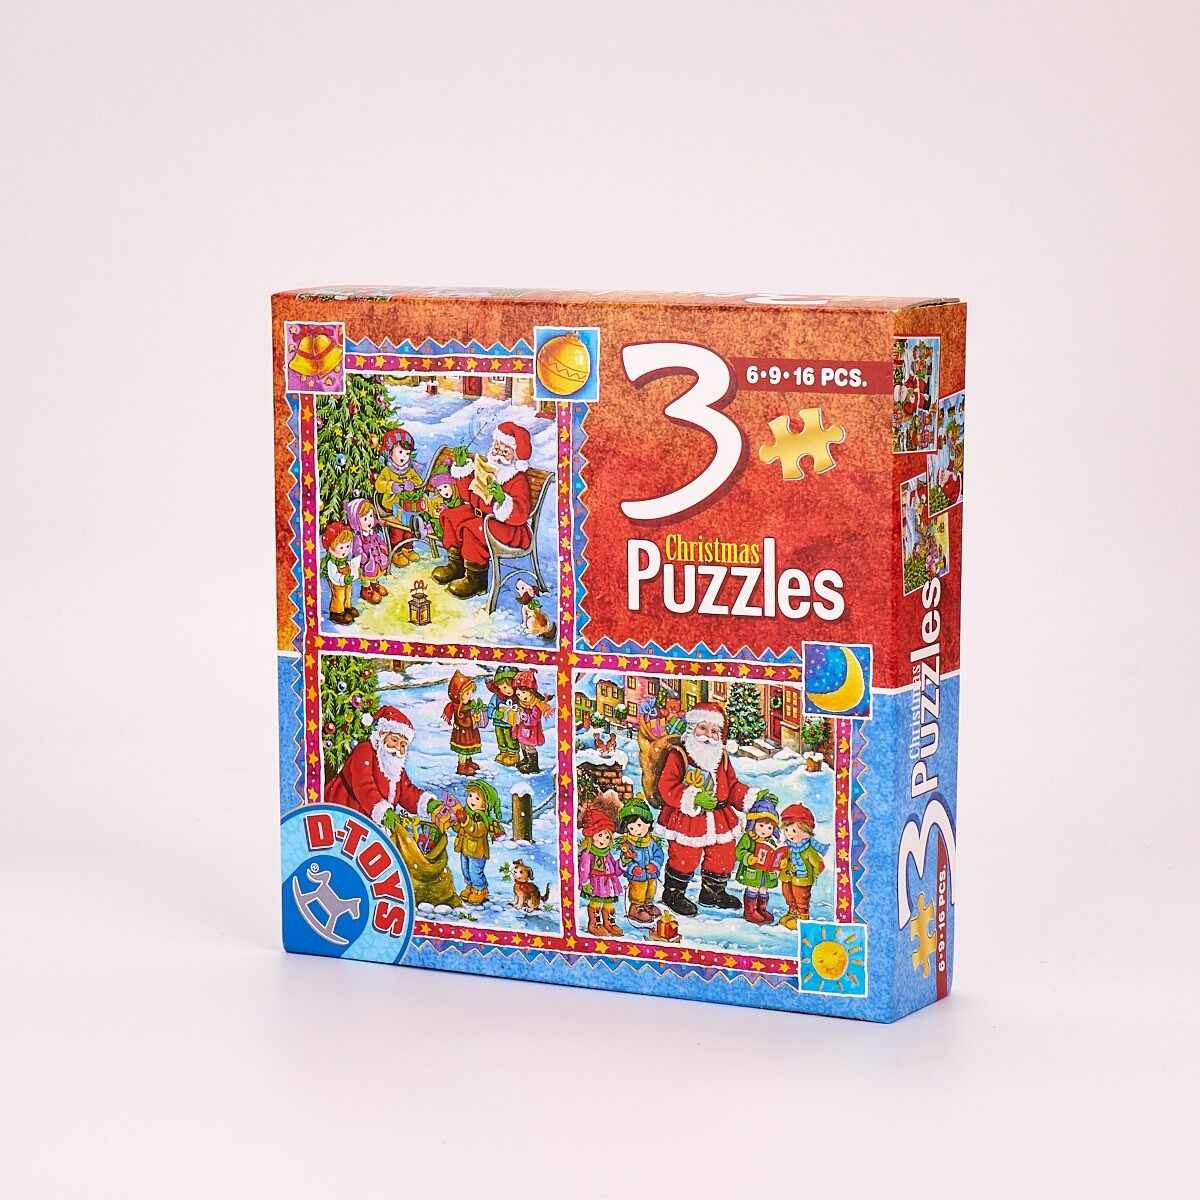 3 puzzles cu Mos Craciun - 6, 9 si 16 piese